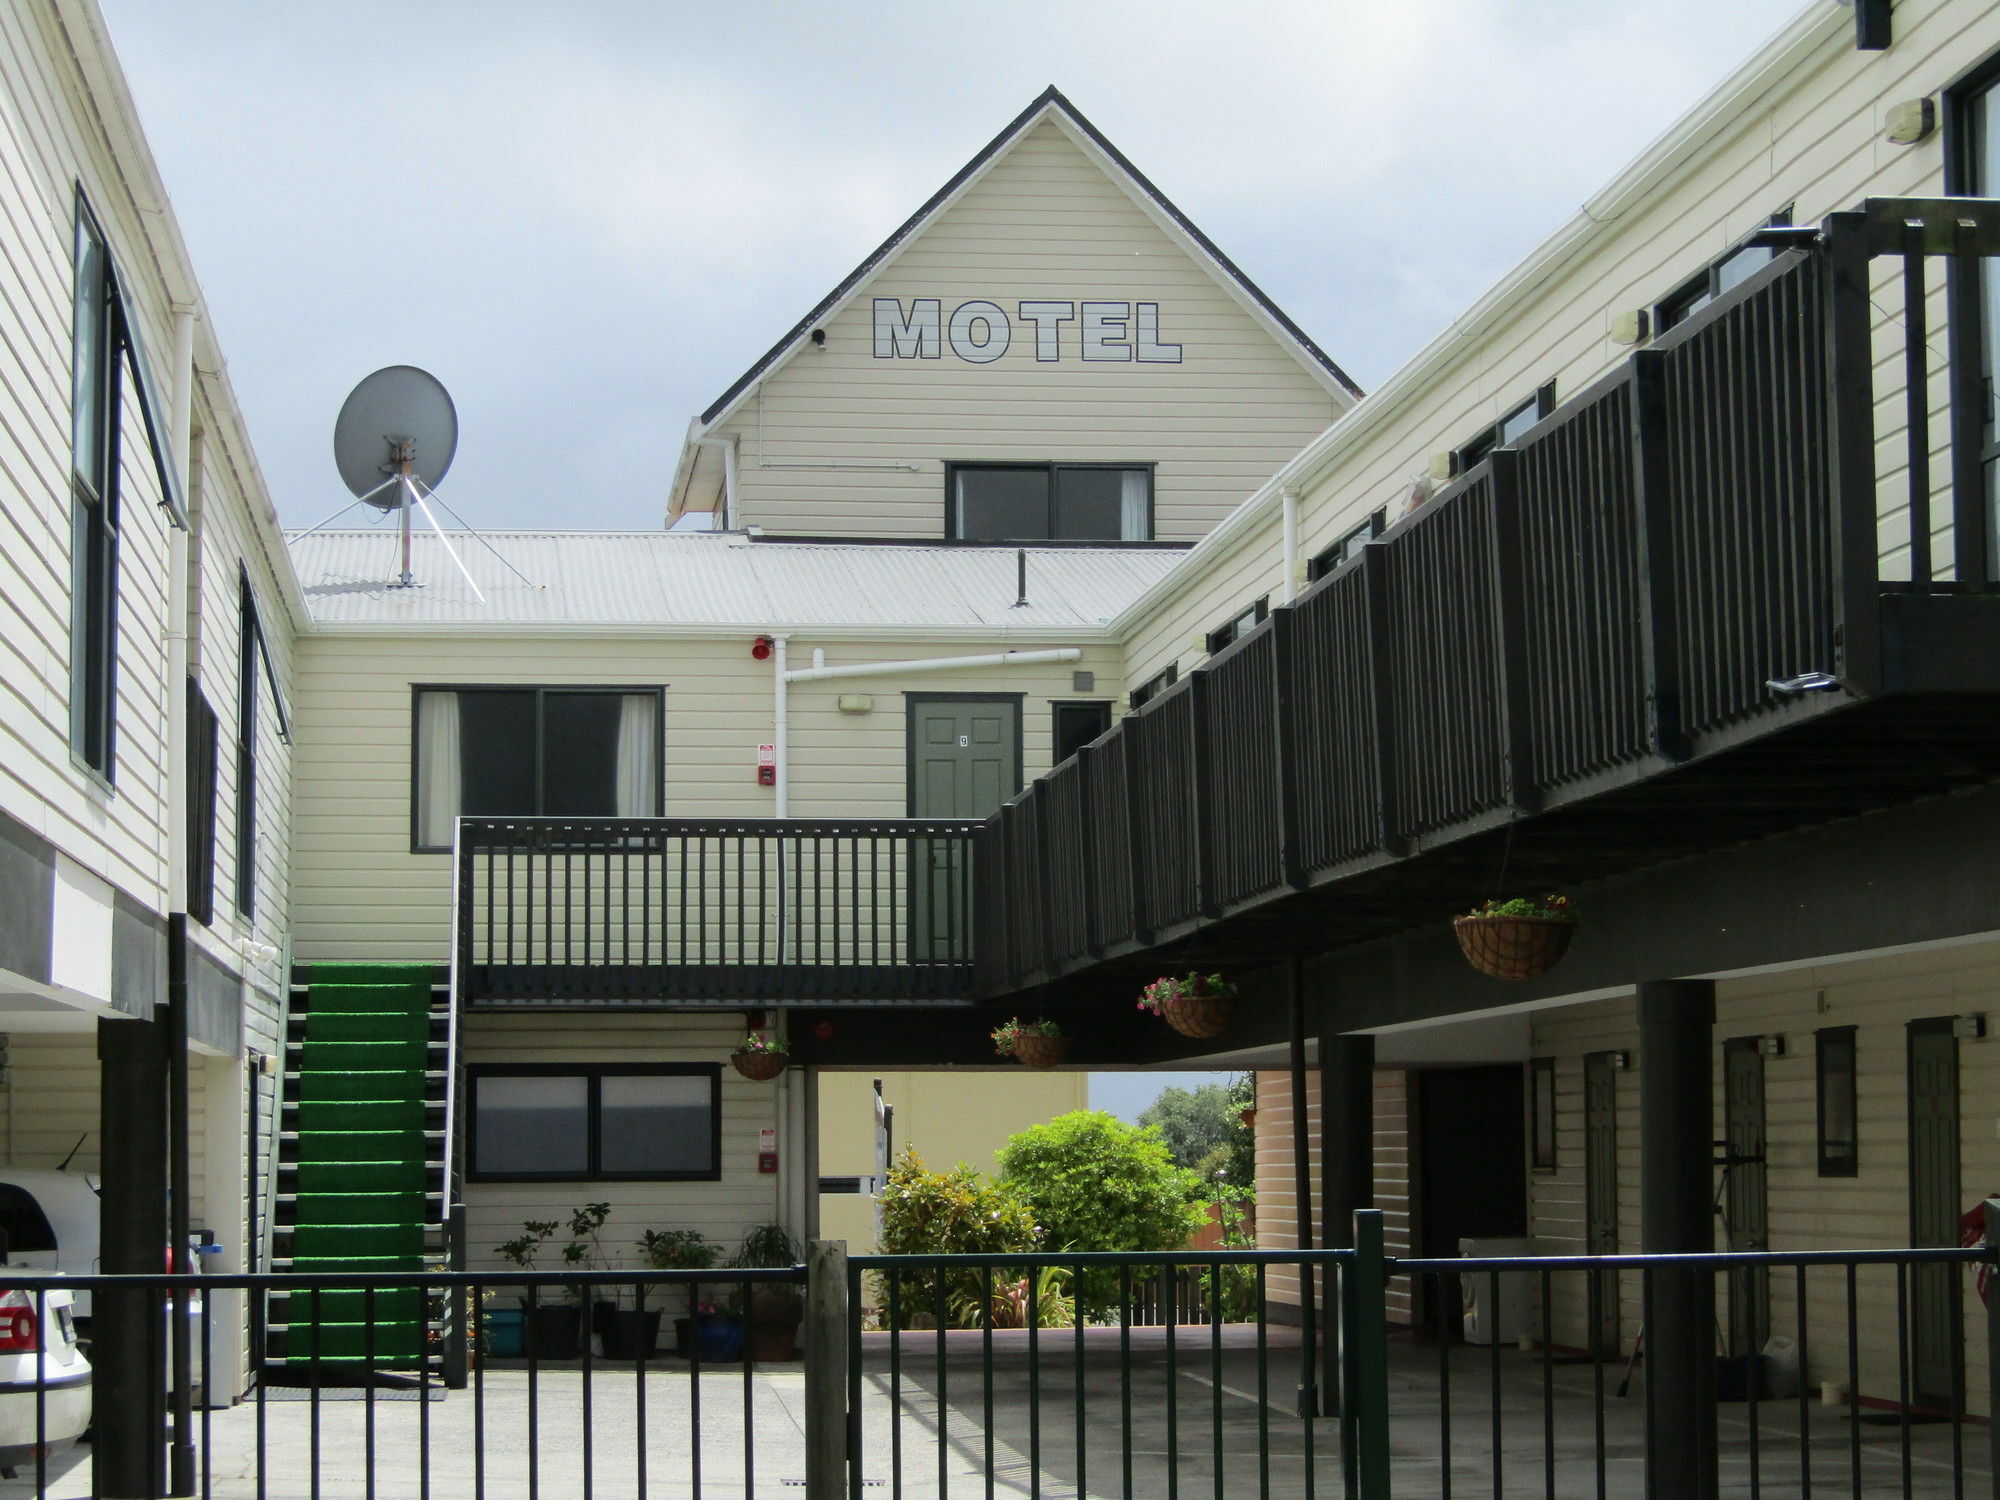 Pohutu Lodge Motel Rotorua Exterior foto